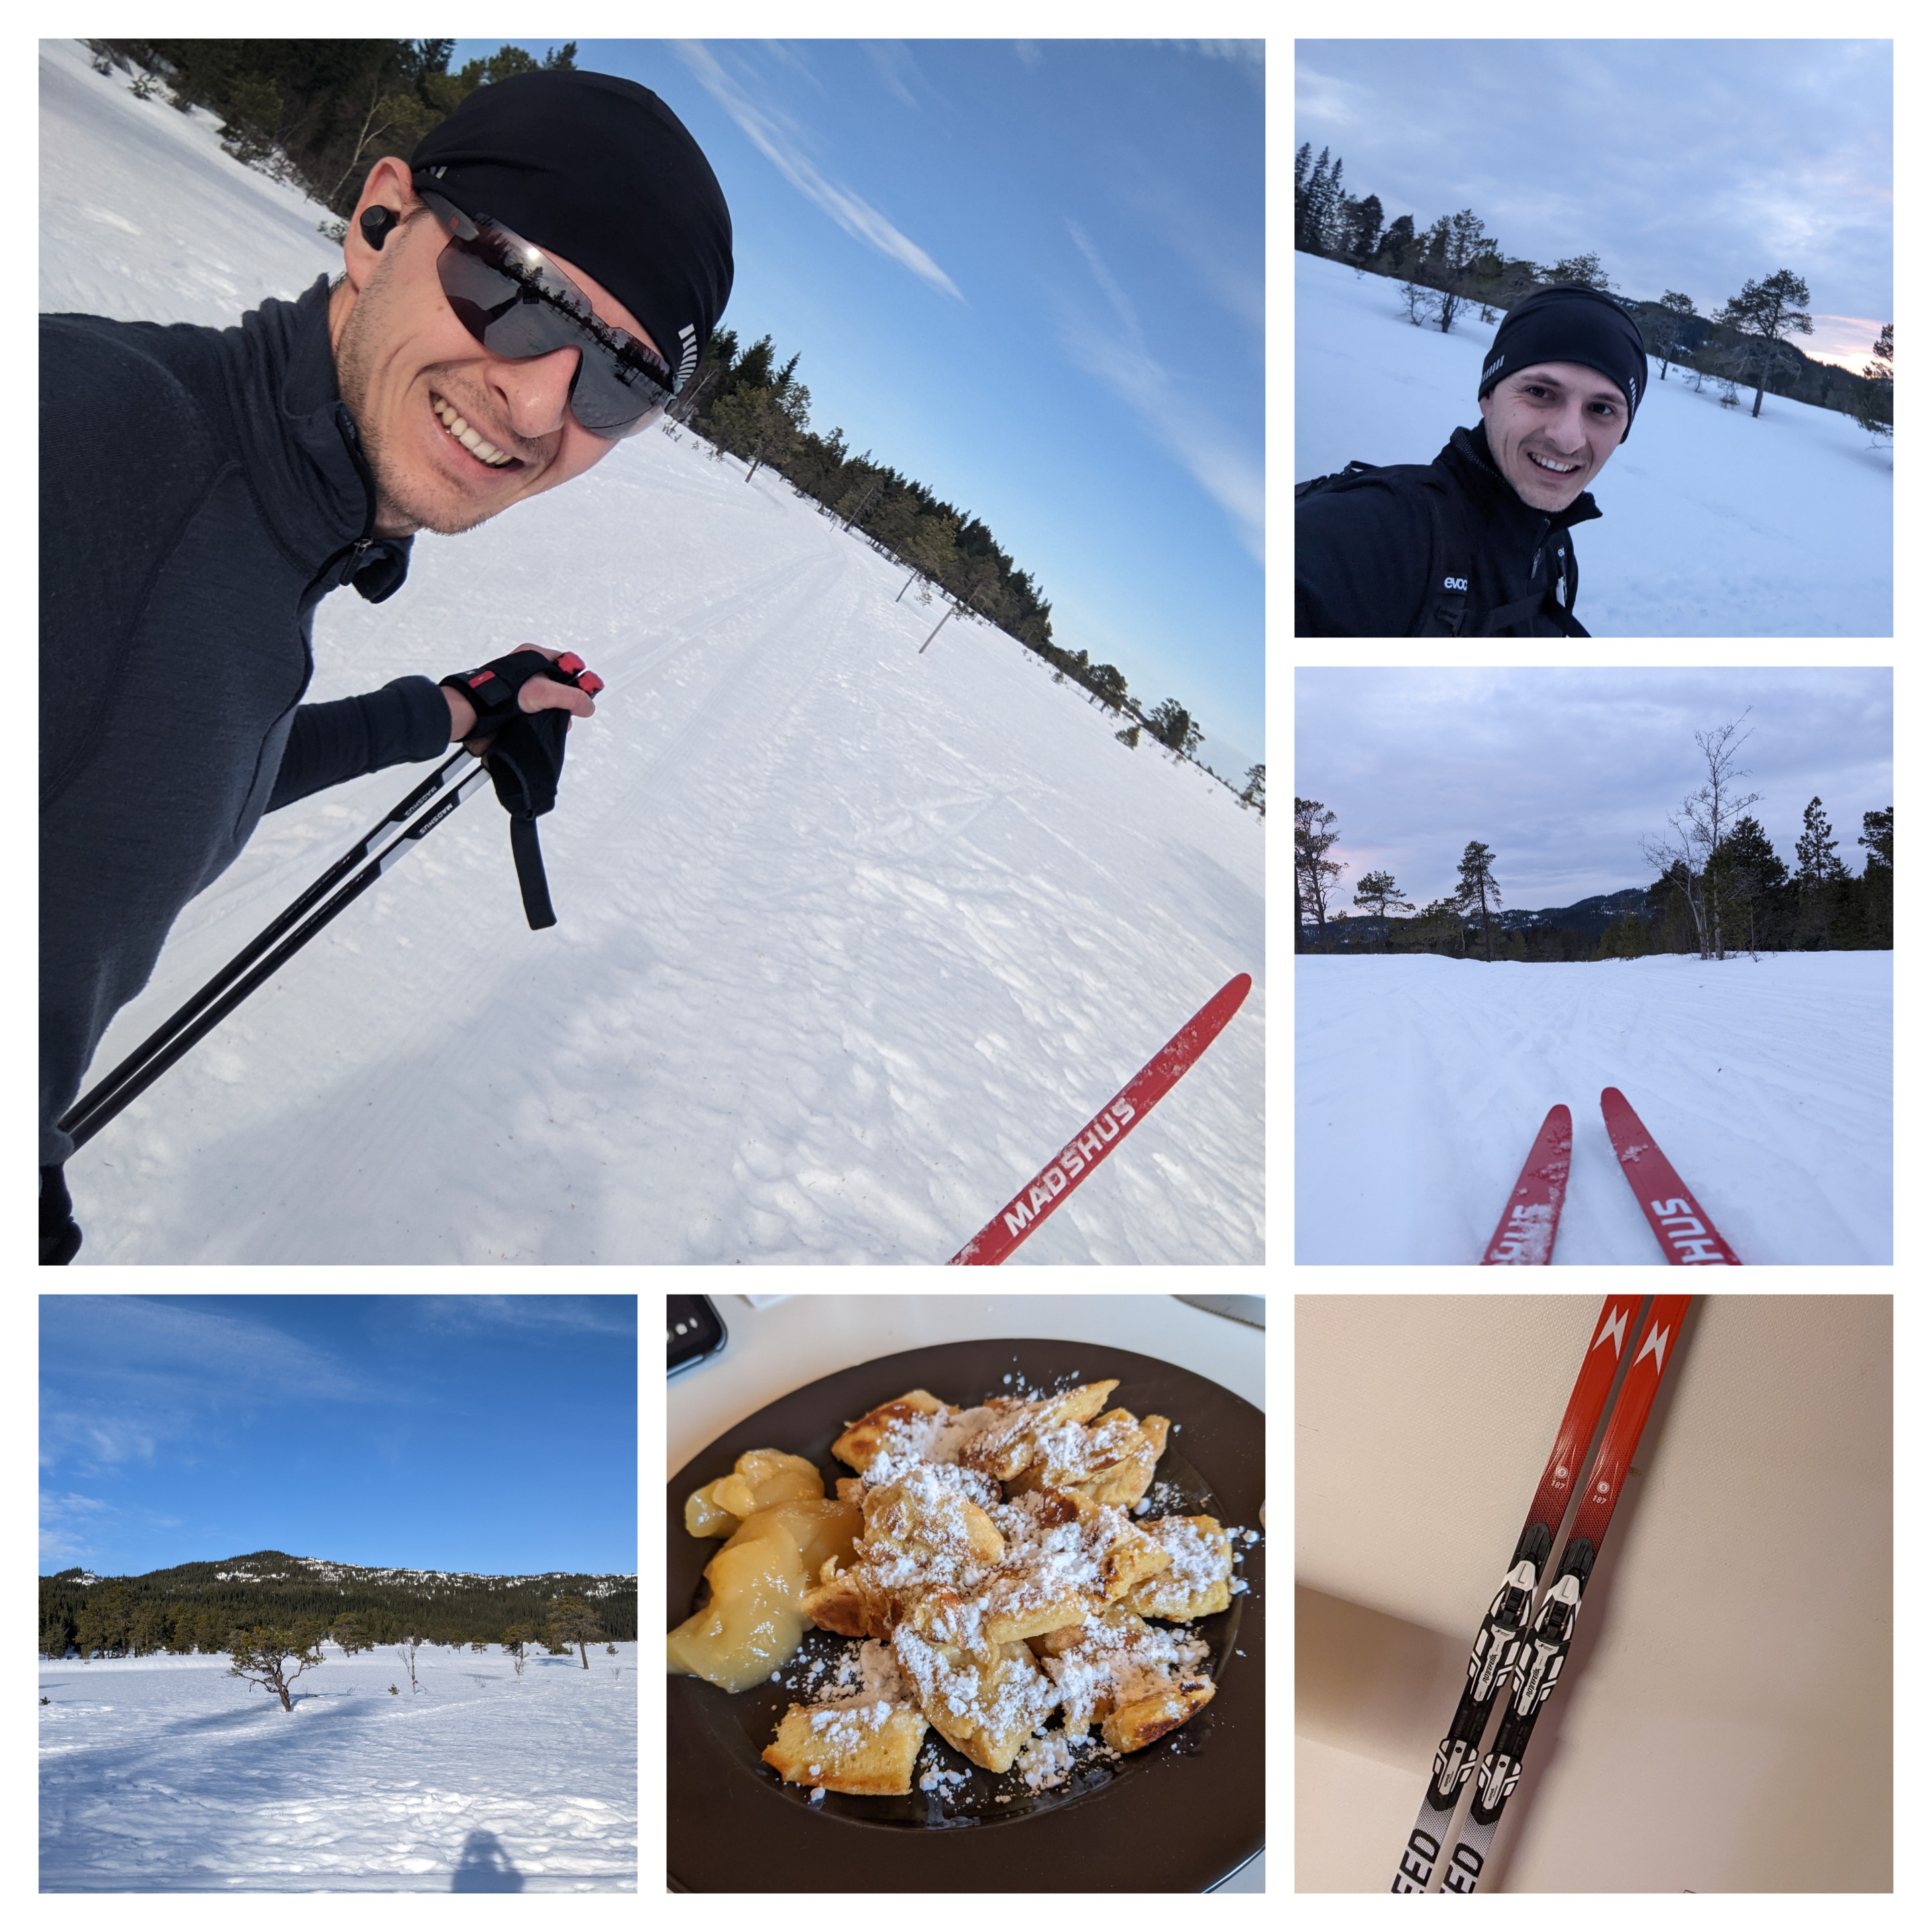 More skiing